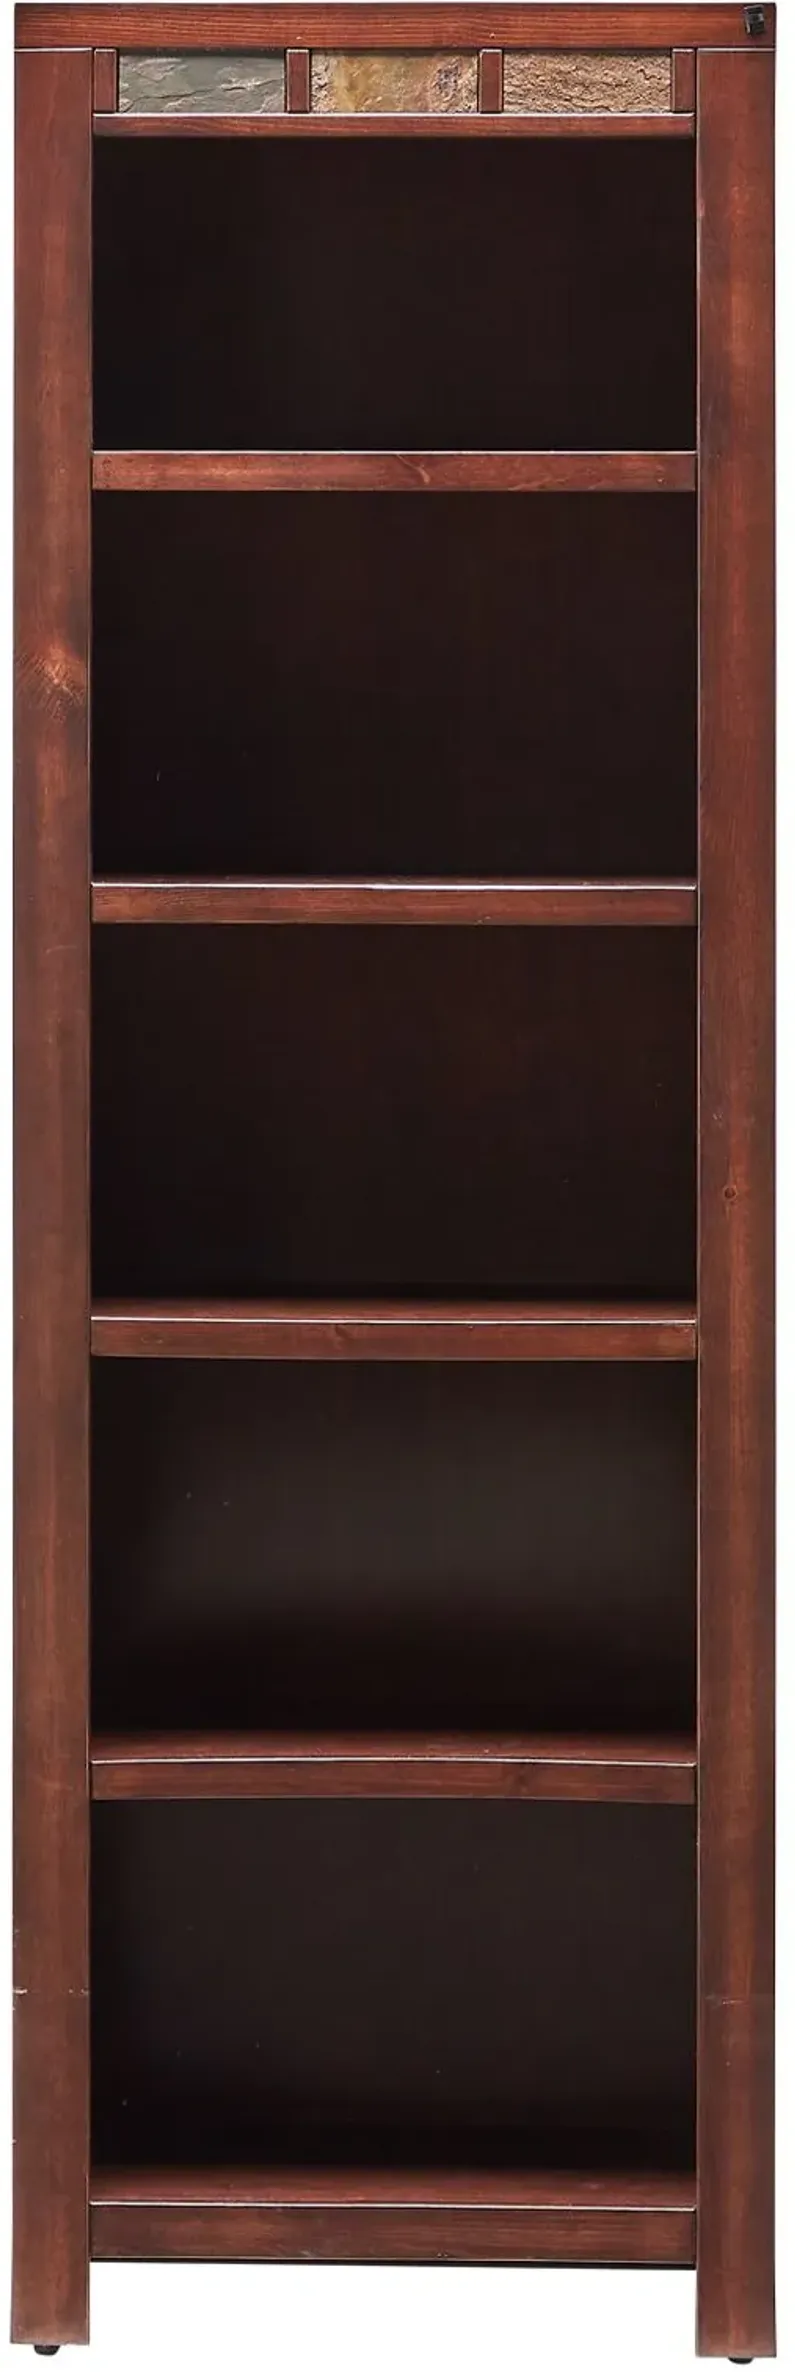 Crestline Bookcase